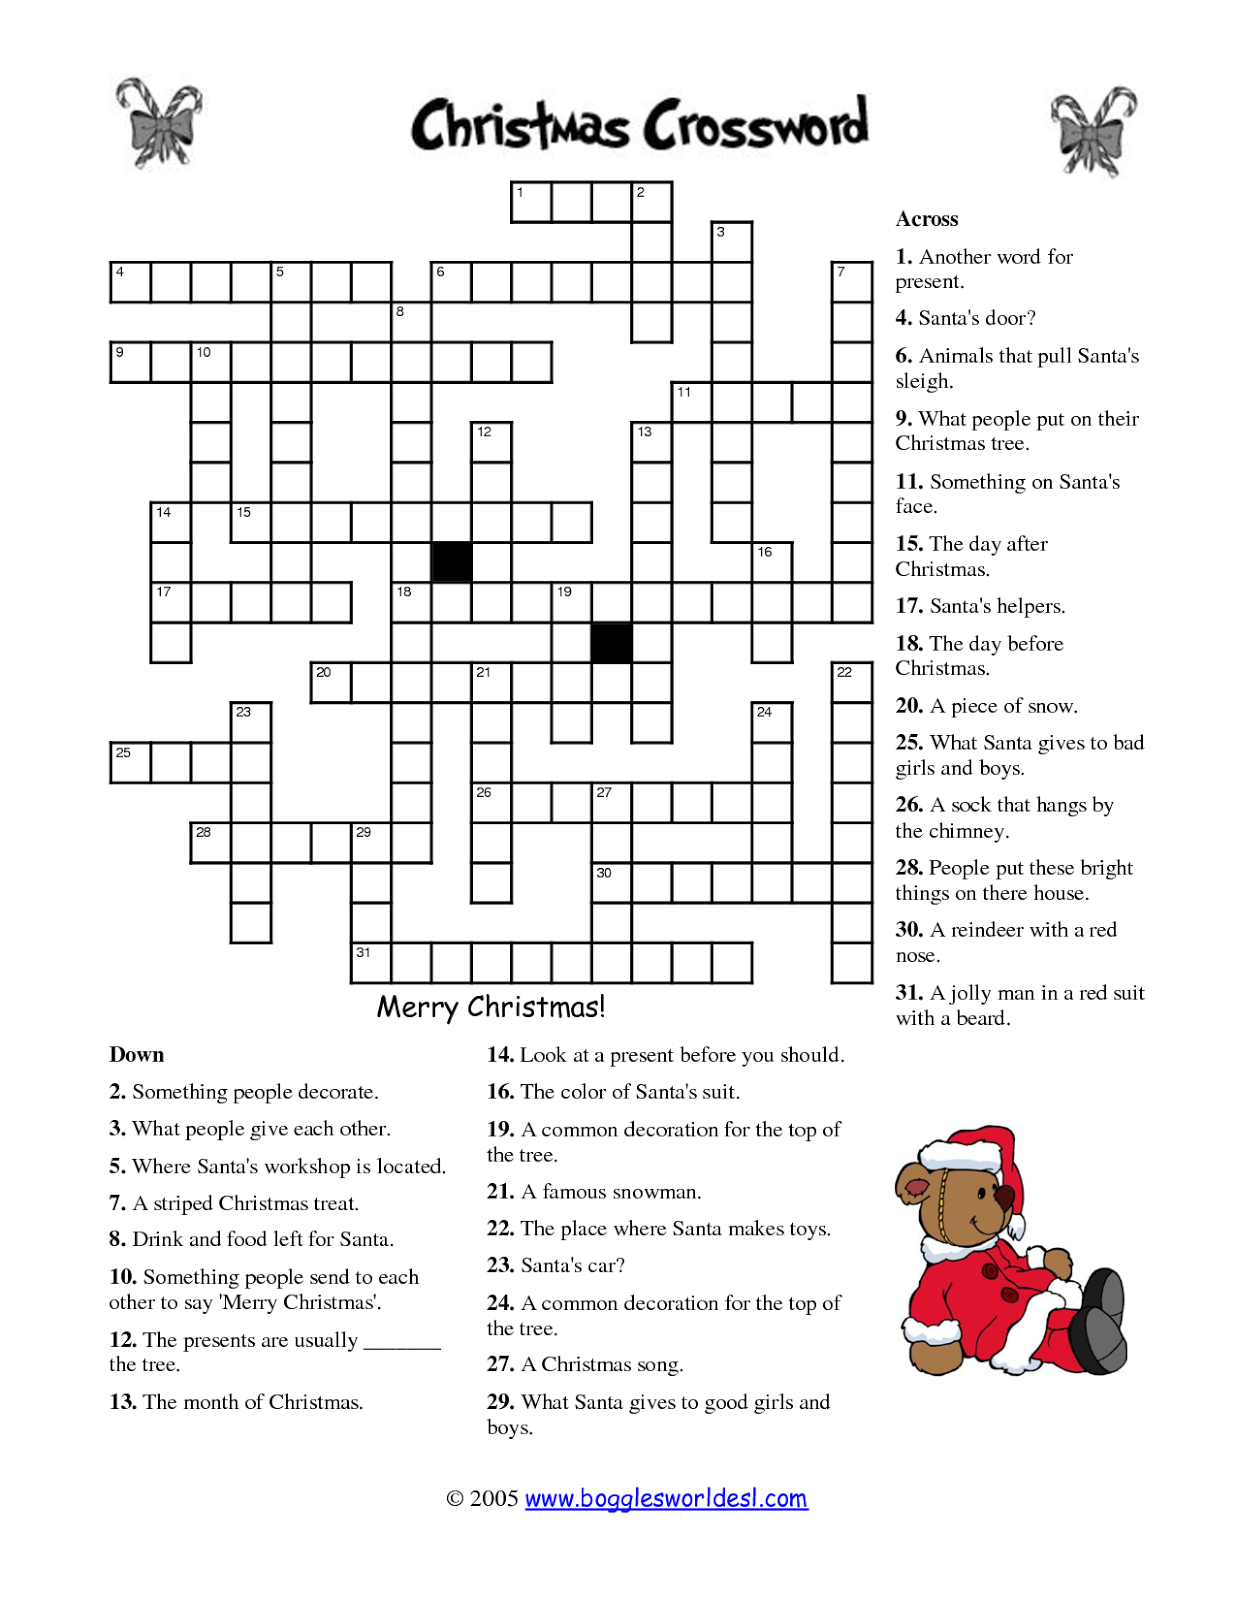 Free Printable Christmas Crossword Puzzles To Print